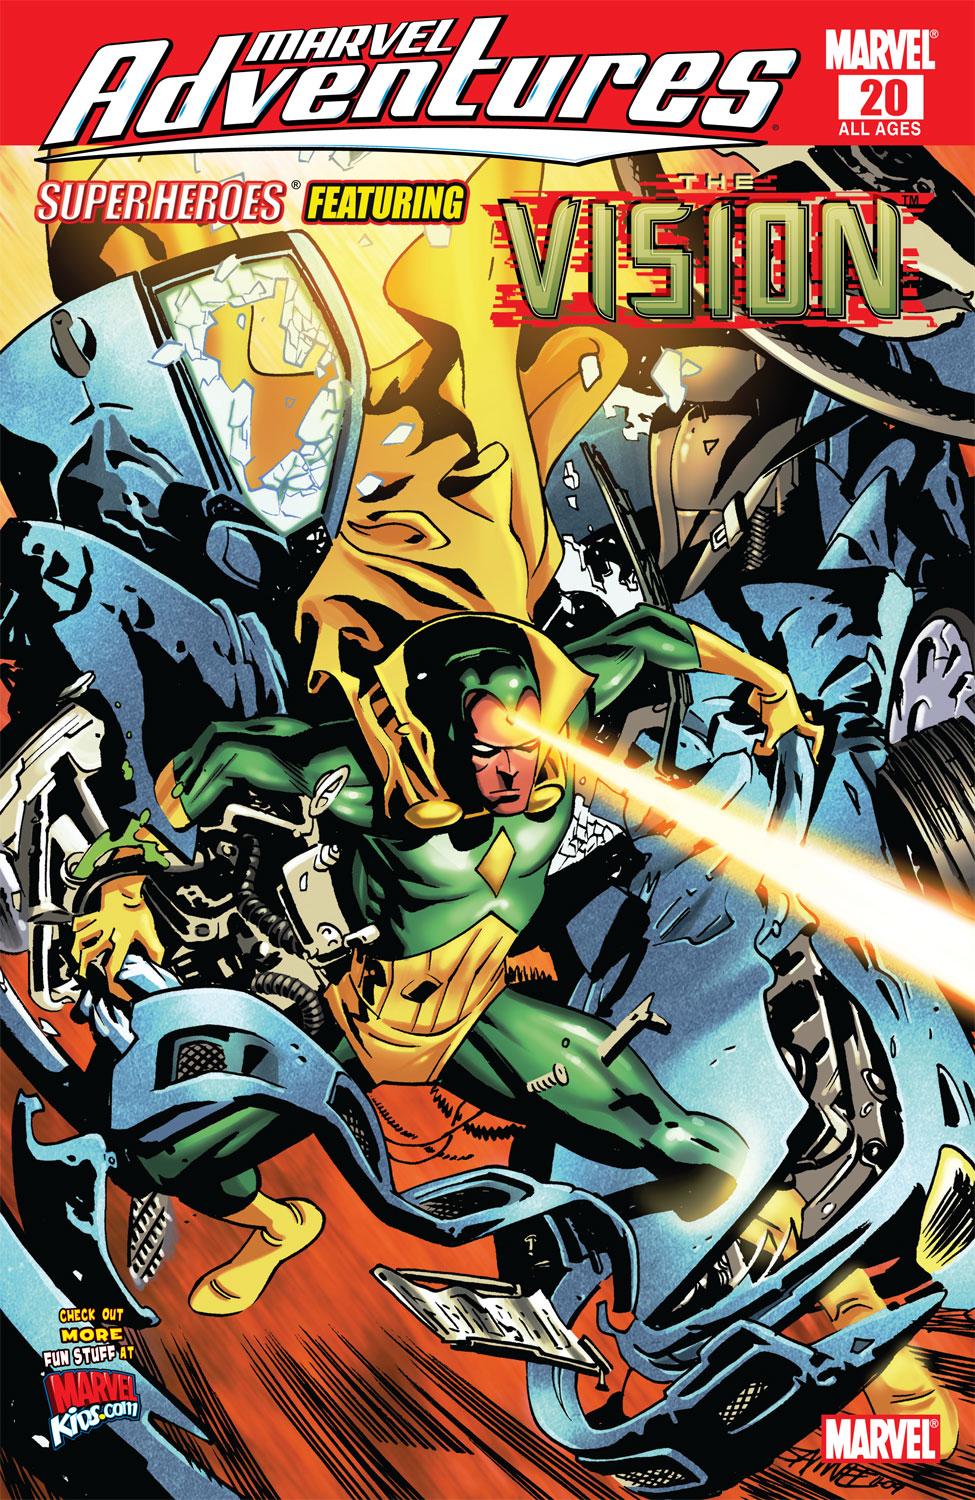 Marvel Adventures Super Heroes (2008) #20